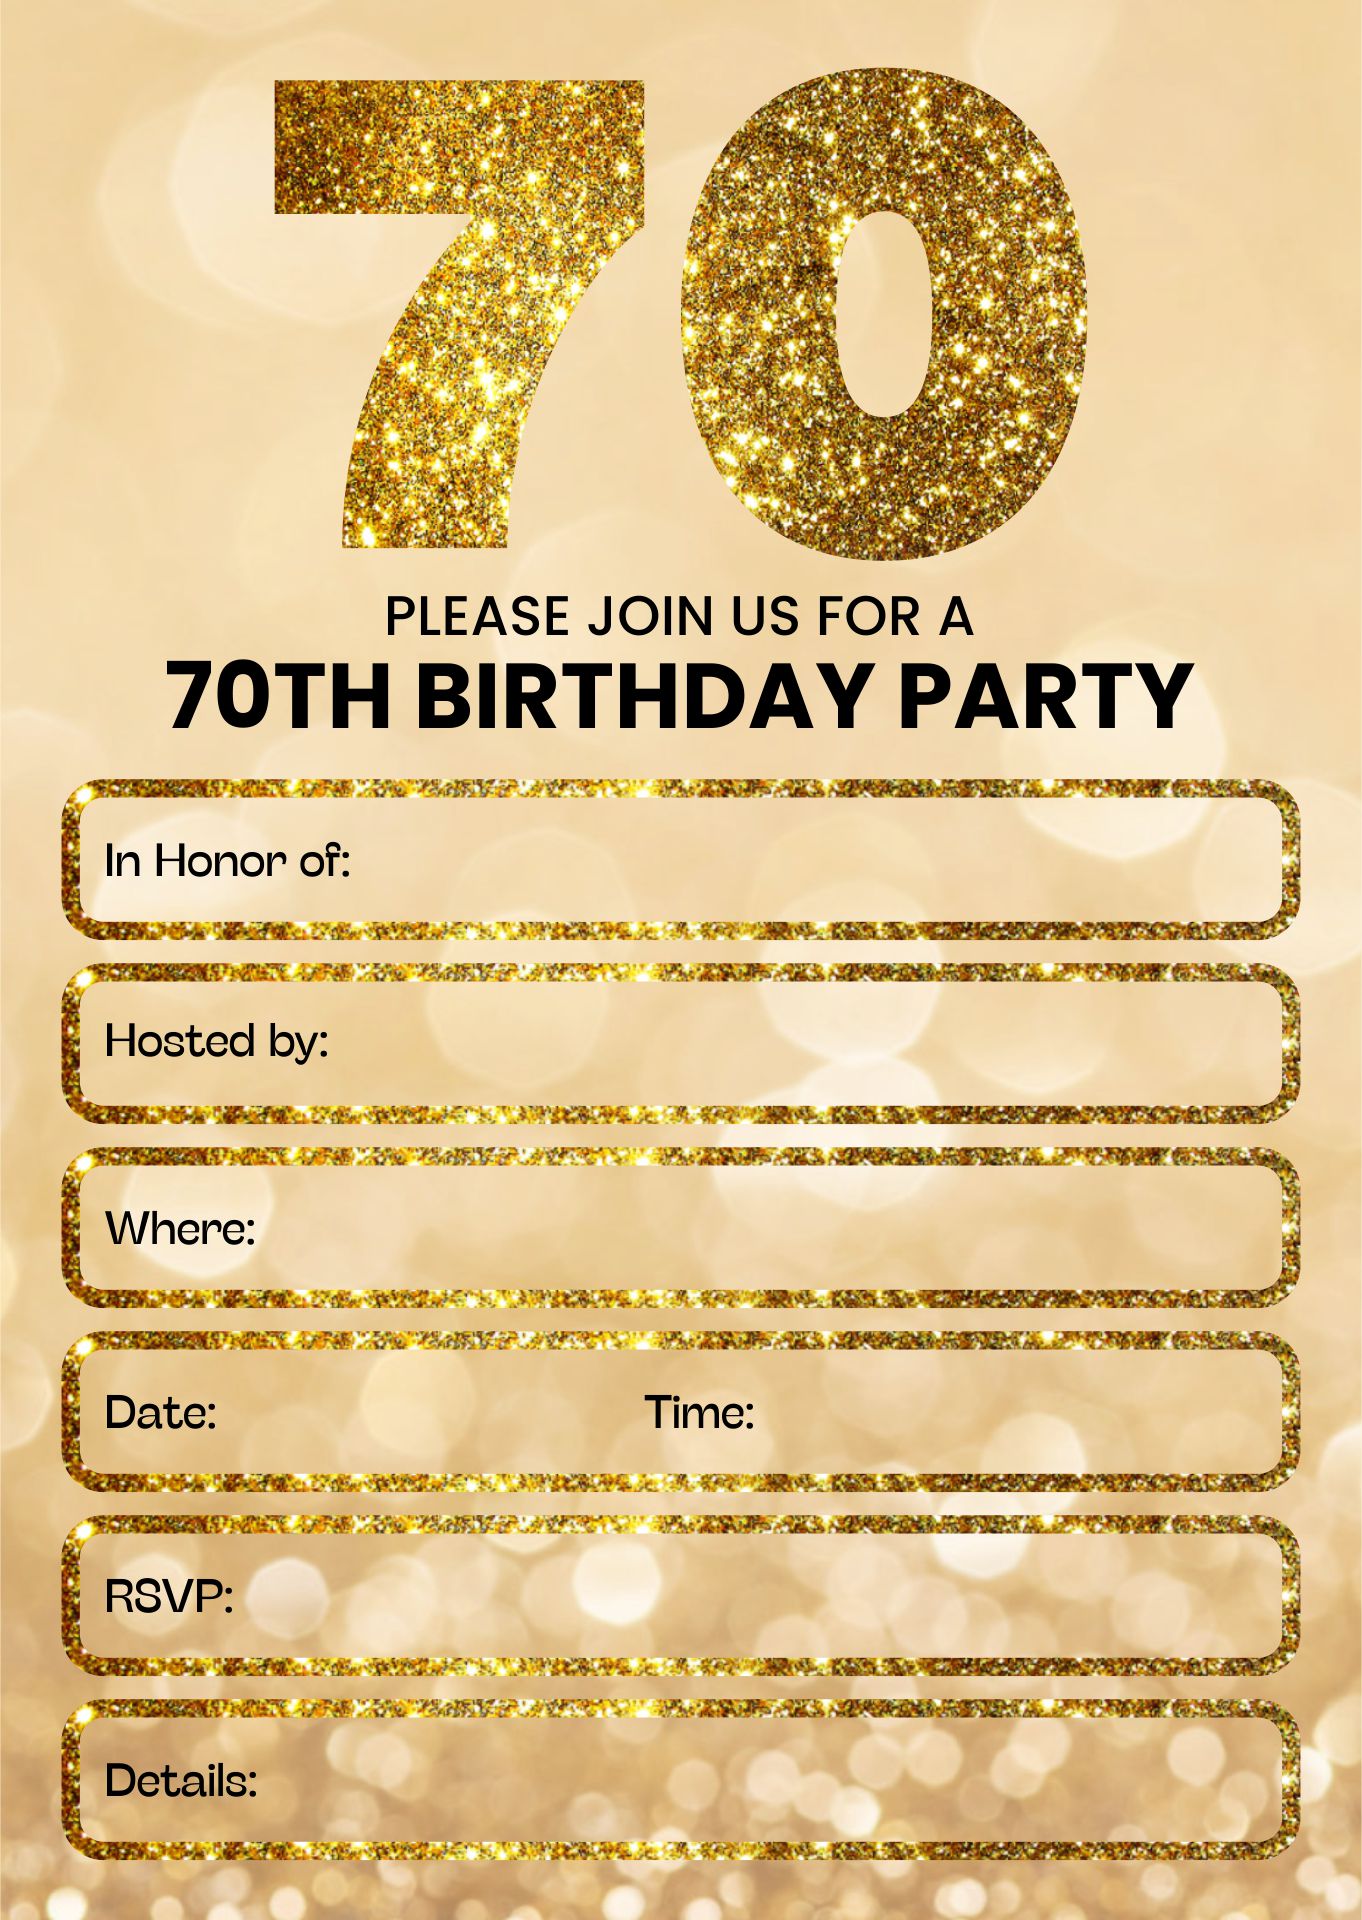 70th-birthday-invitation-template-word-polito-weddings